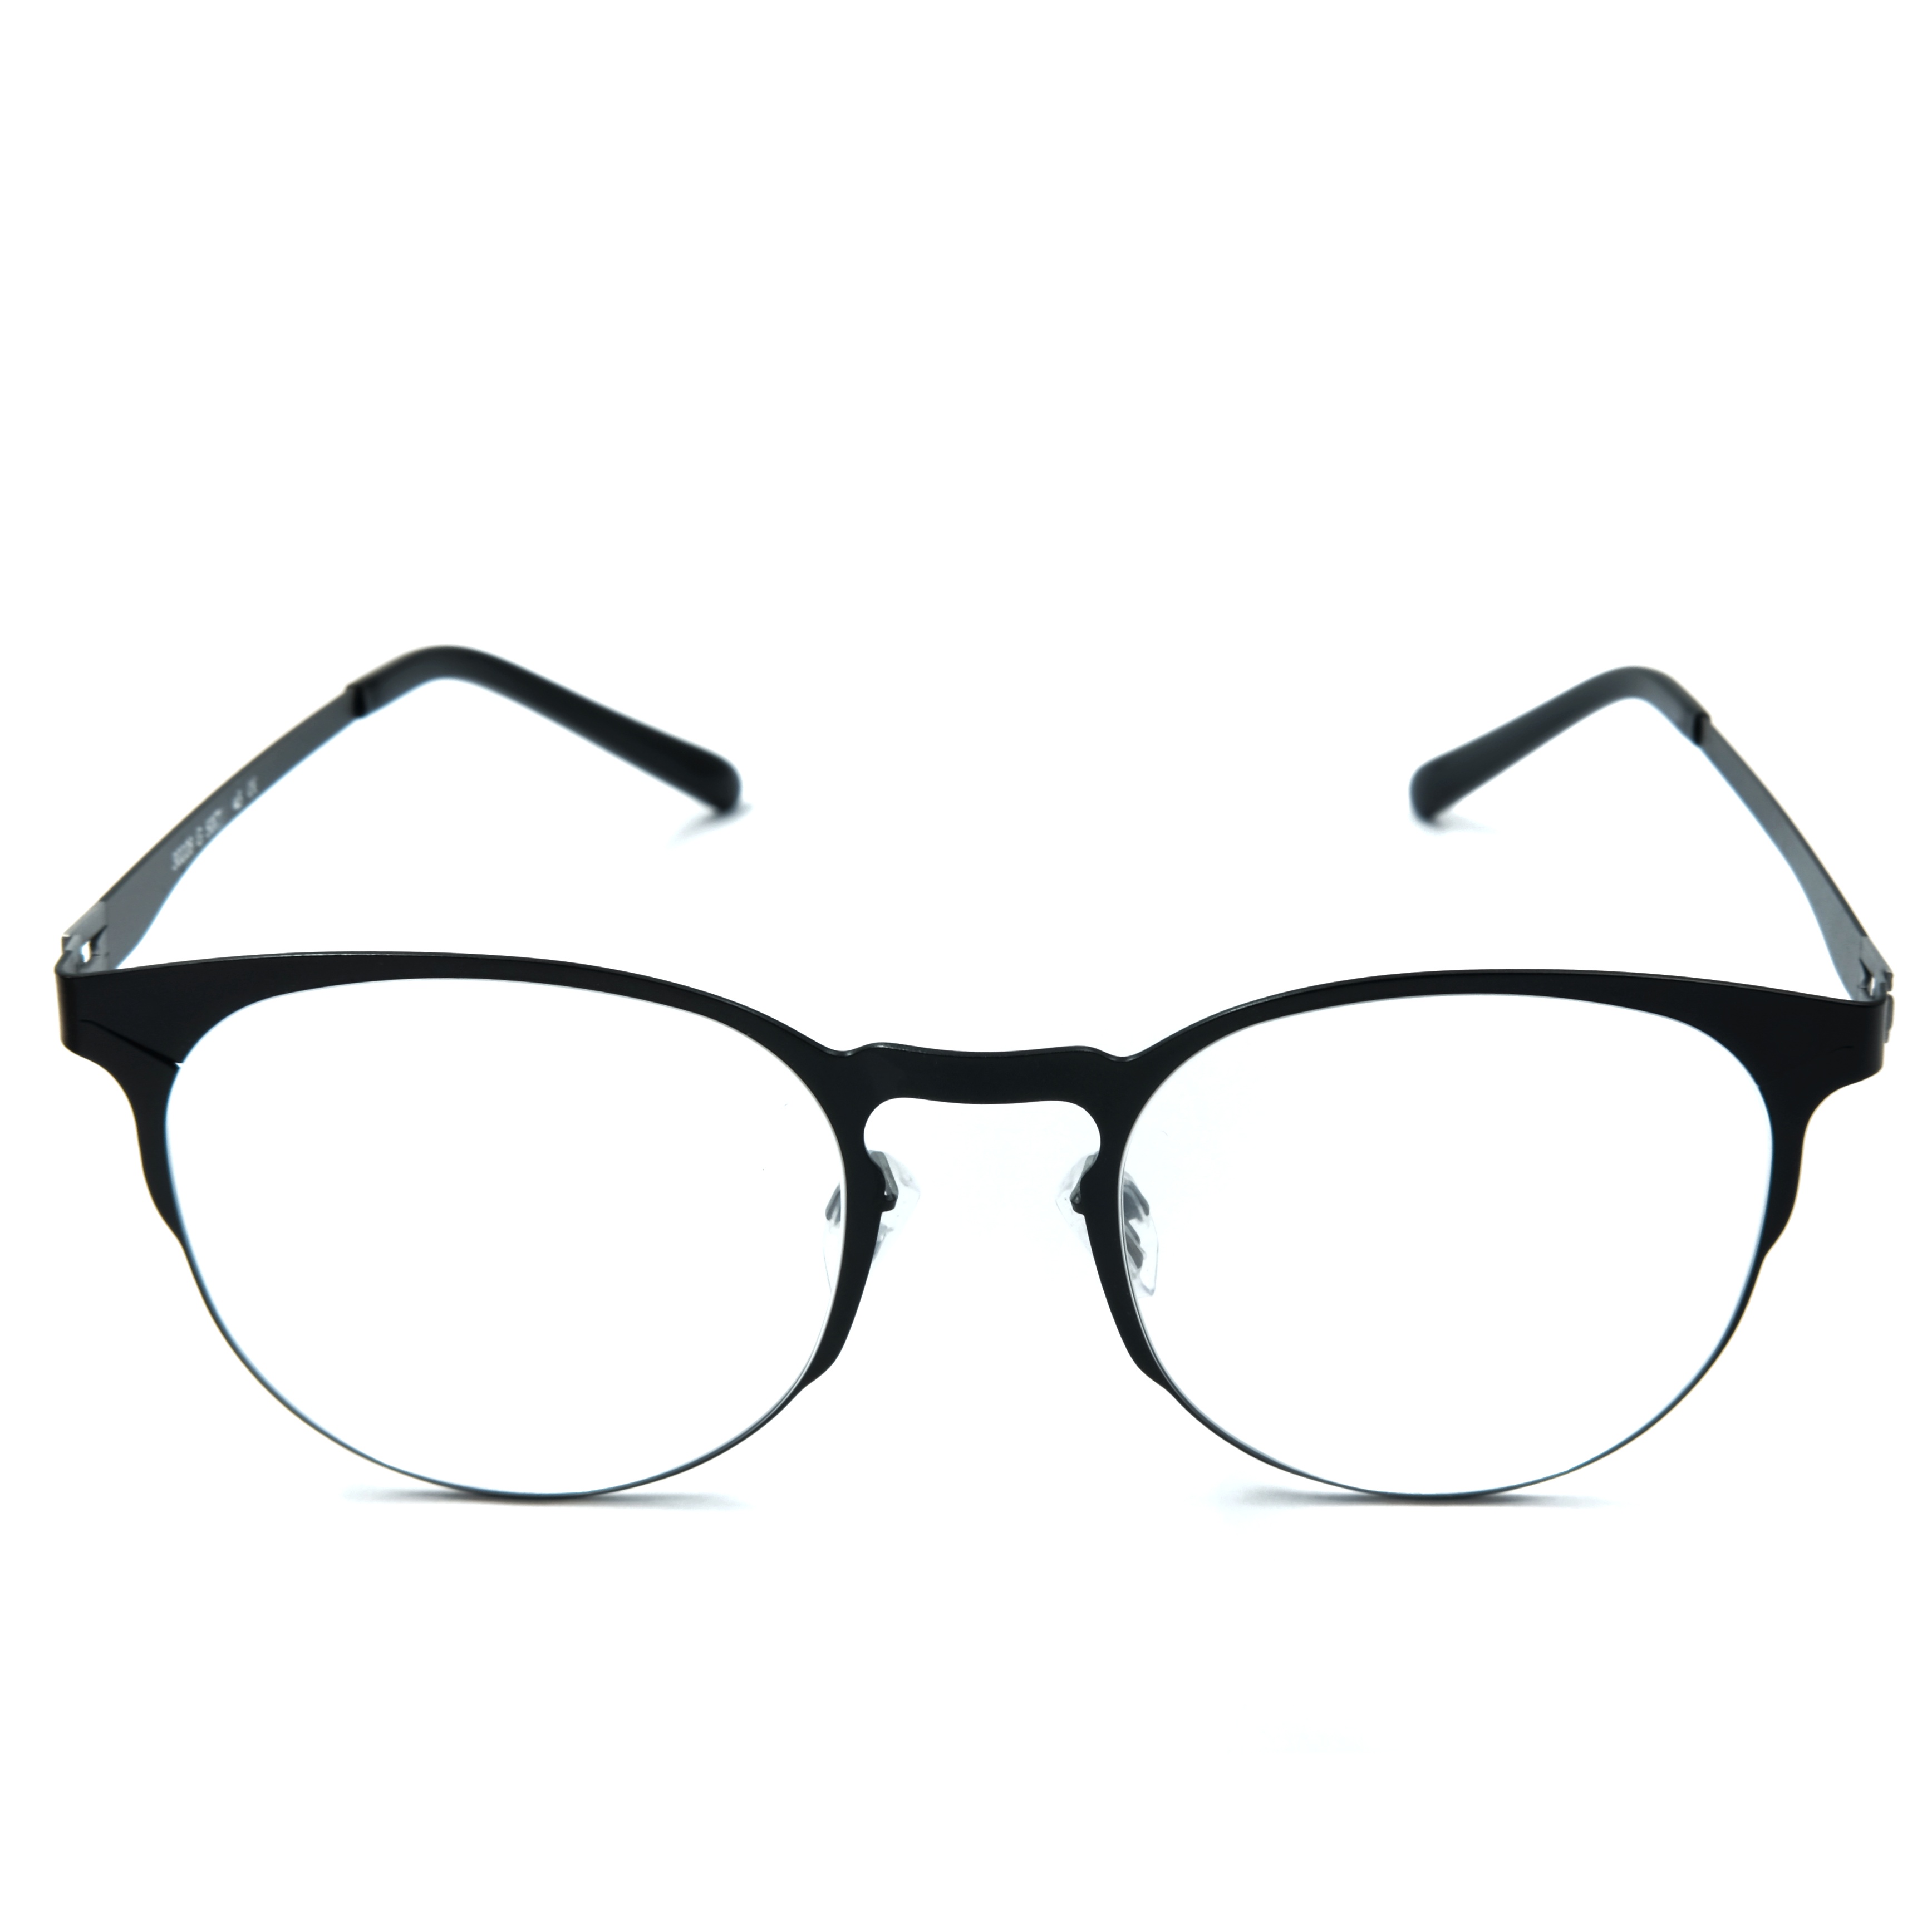 Marco de anteojos de acetato Bisagra libre Borde redondo Gafas de lectura personalizadas Proveedor de gafas de luz azul